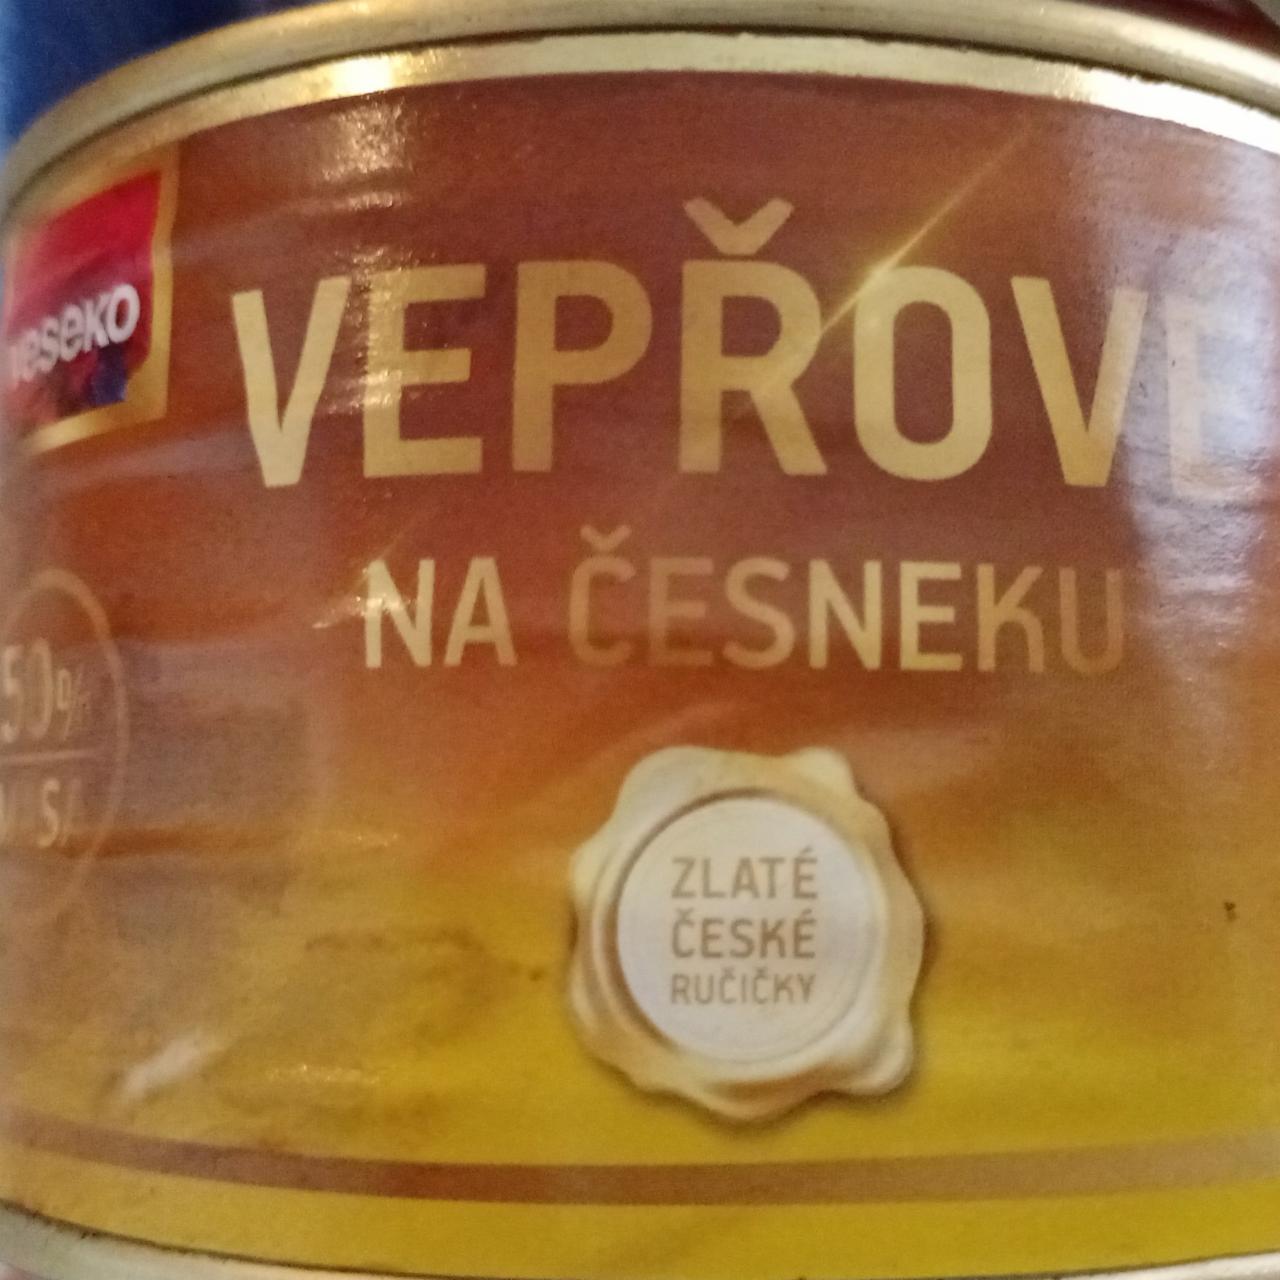 Fotografie - Vepřové na česneku Veseko